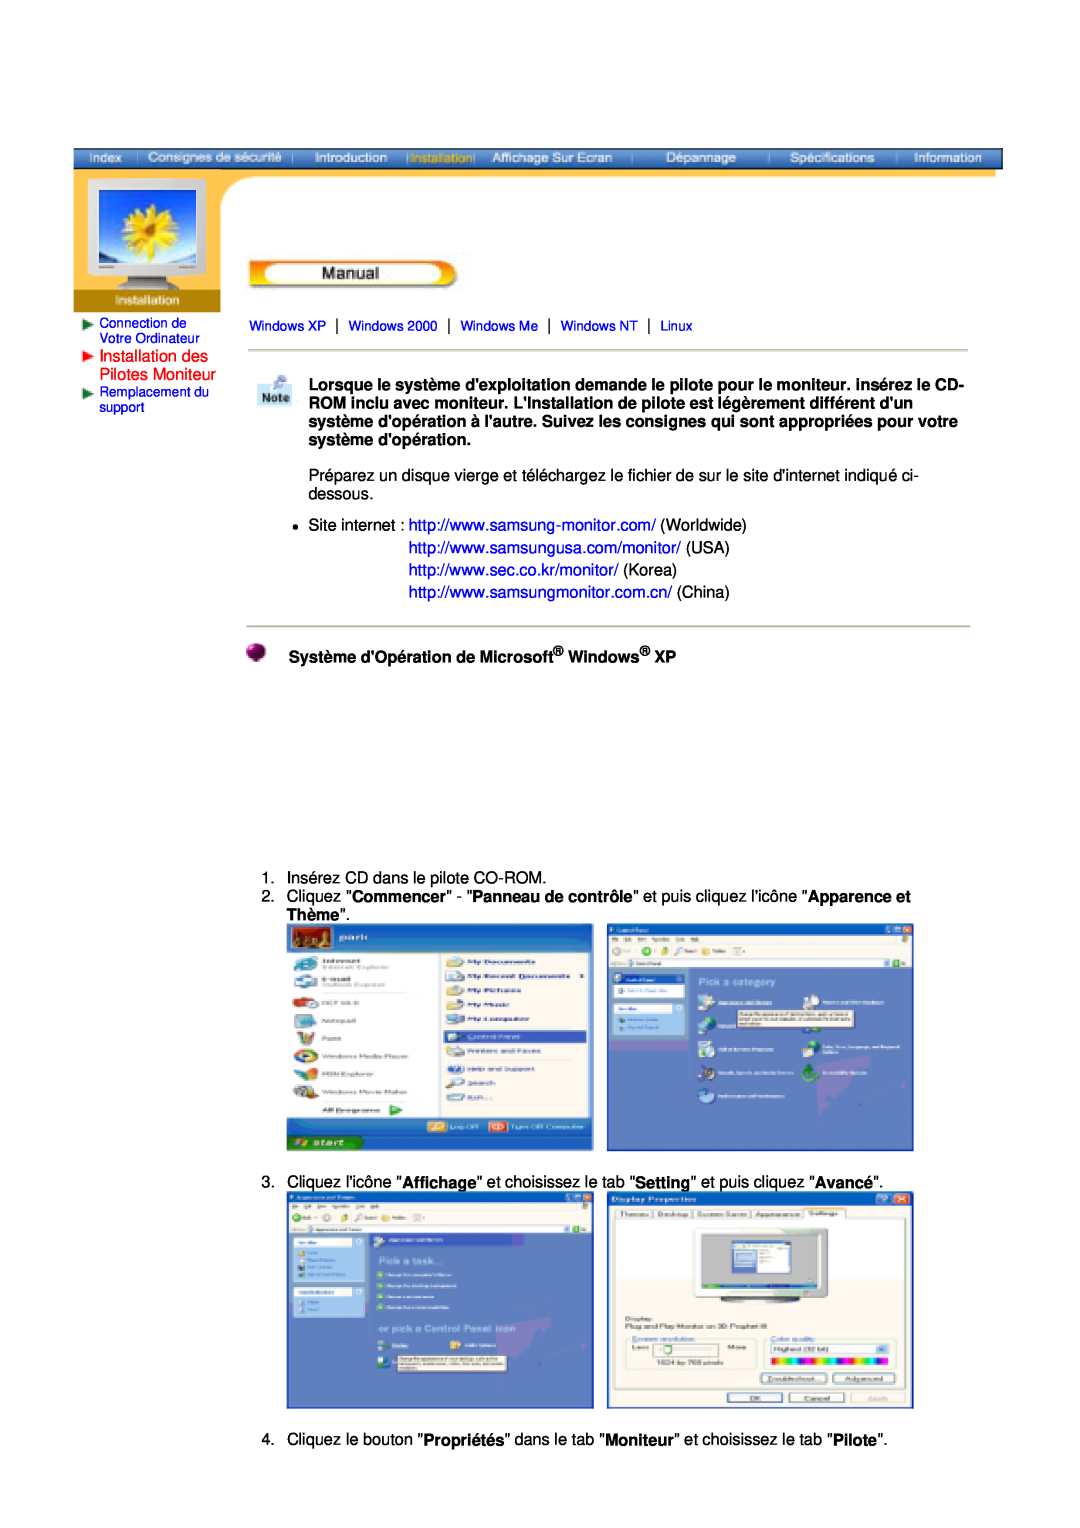 Samsung V, 153S manual Système dOpération de Microsoft Windows XP, Installation des Pilotes Moniteur 